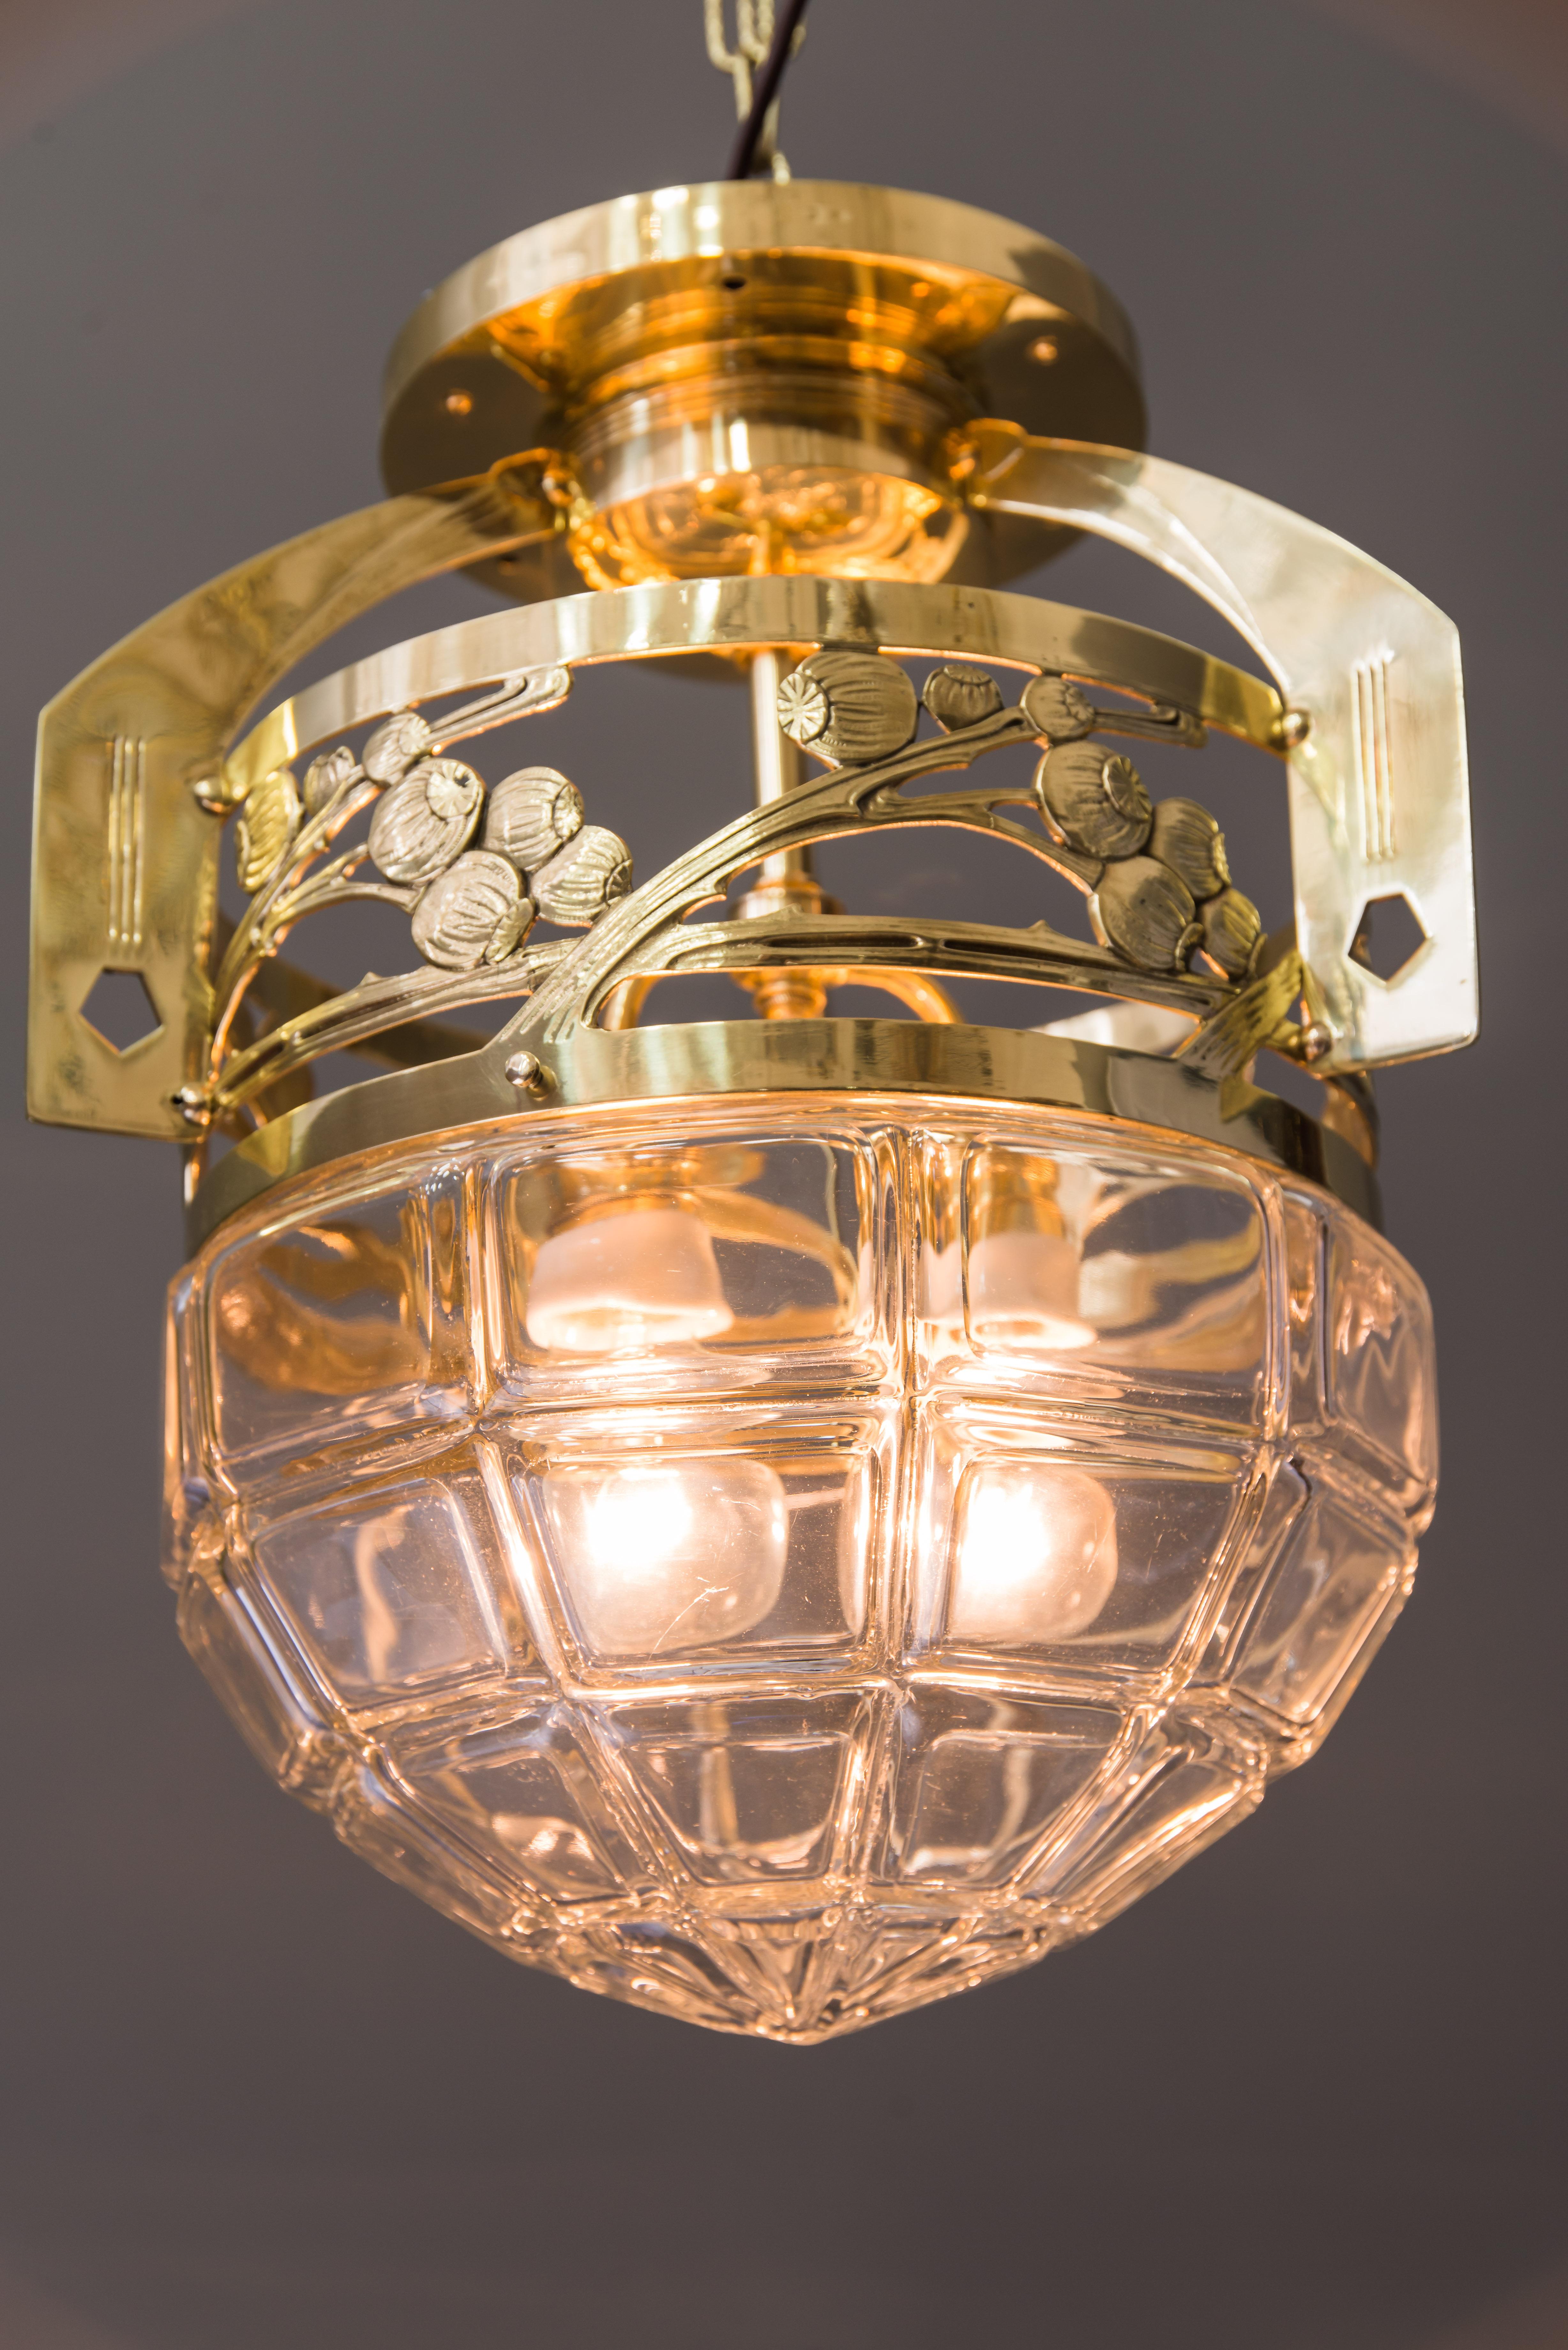 Polished Jugendstil Ceiling Lamp with Cut Glass, circa 1908